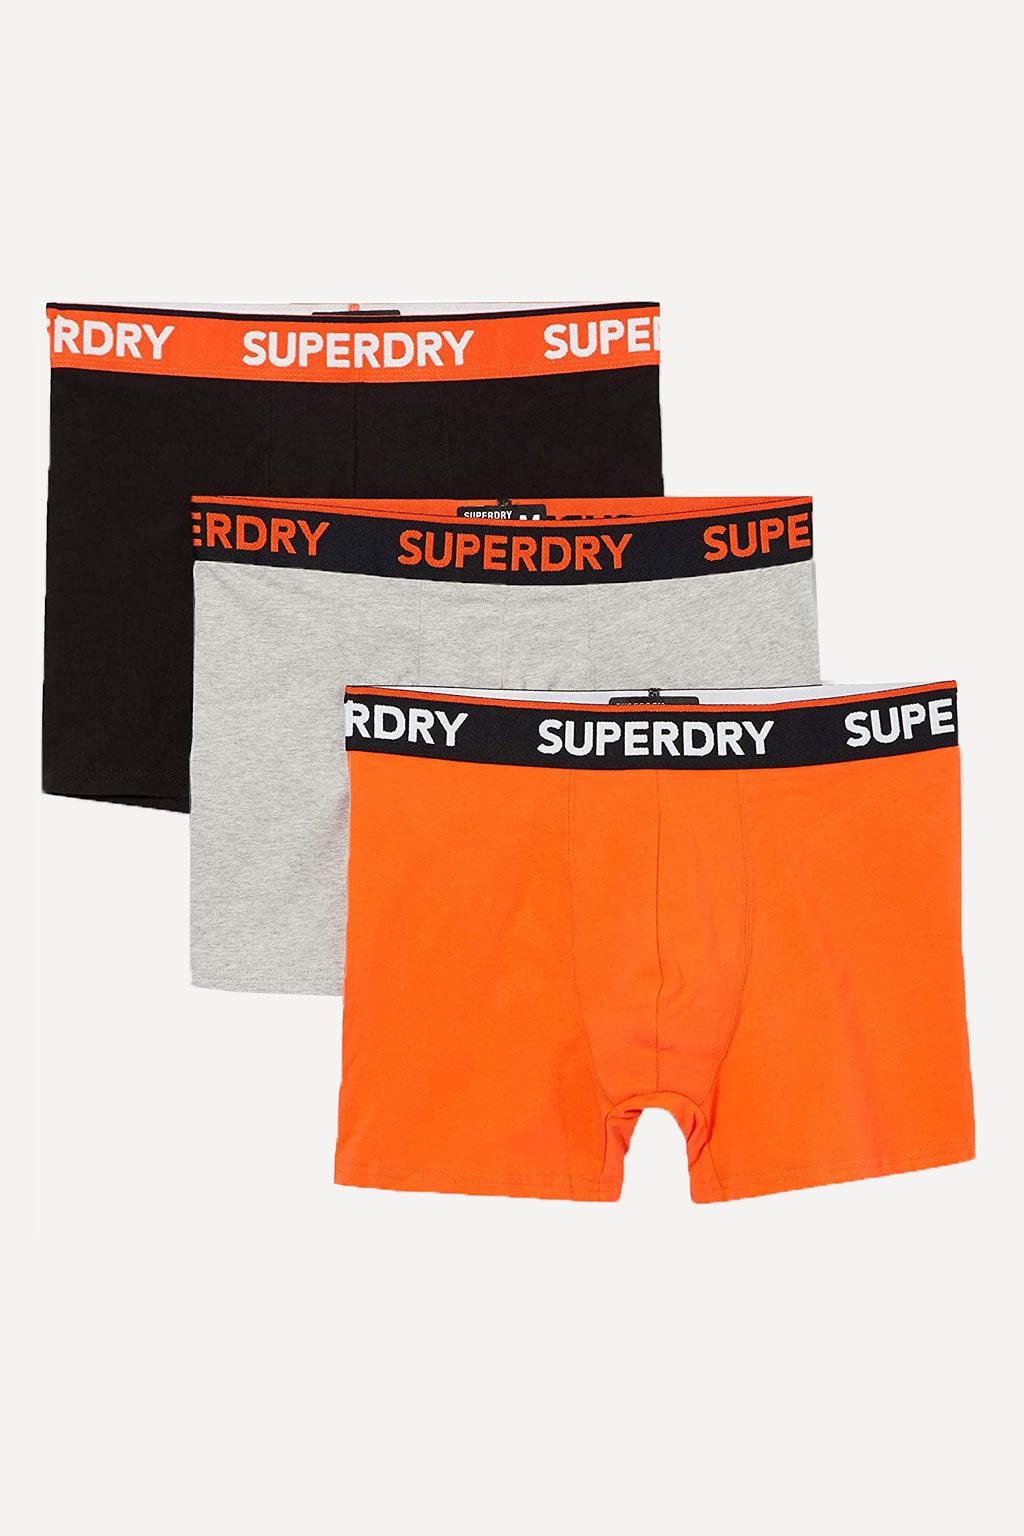 Superdry underwear | Big Boss | the menswear concept